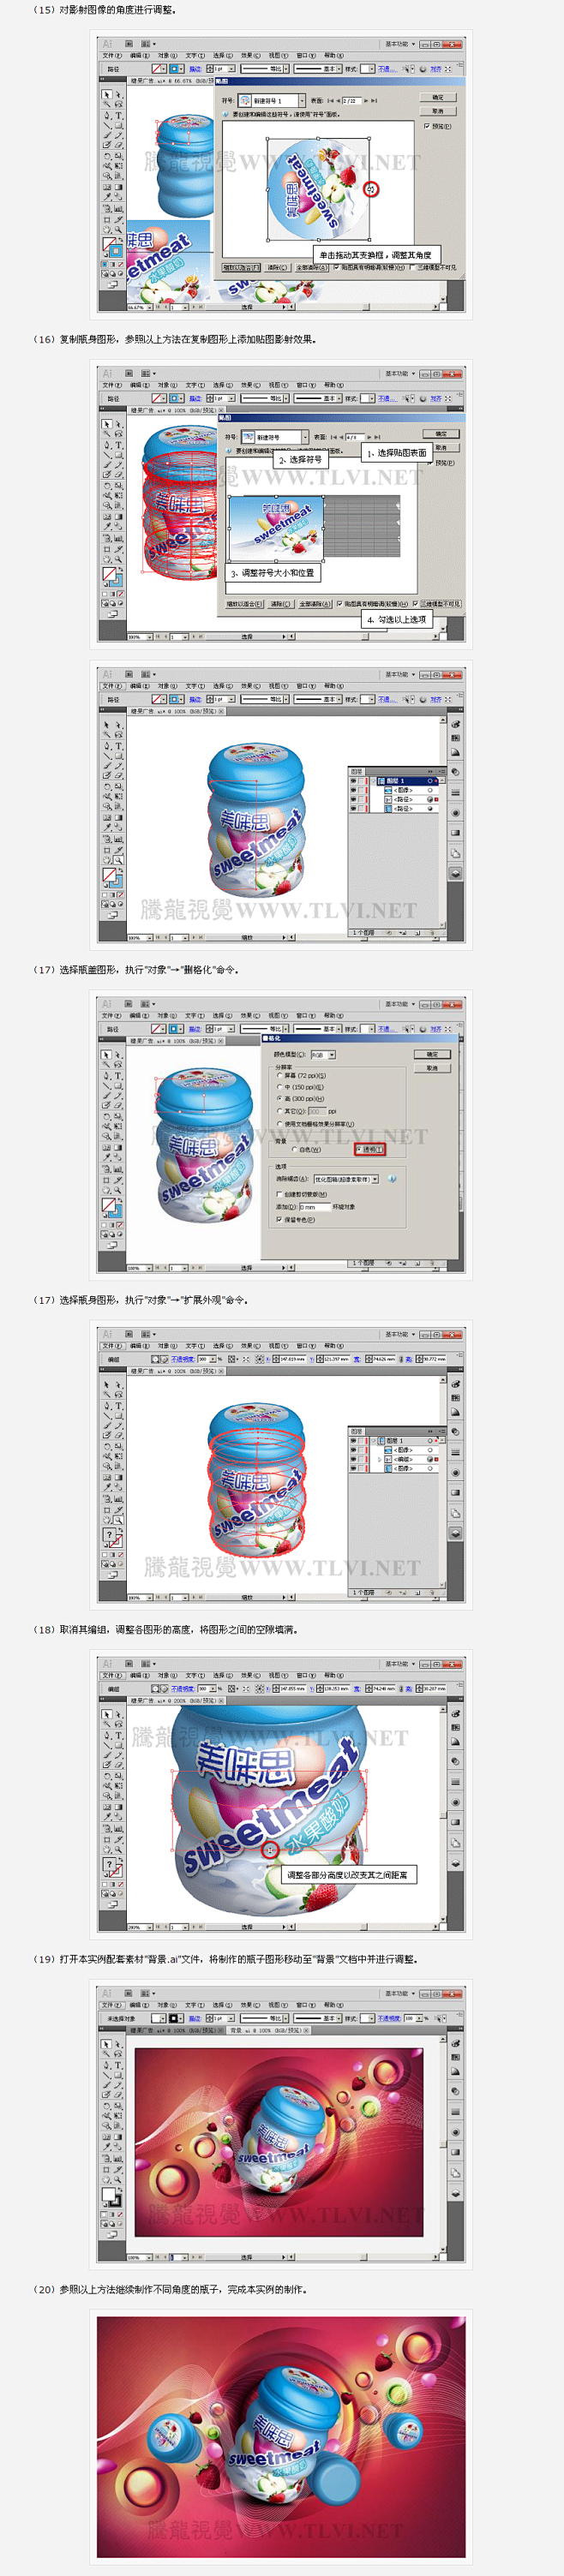 Illustrator CS5中的3D绕...